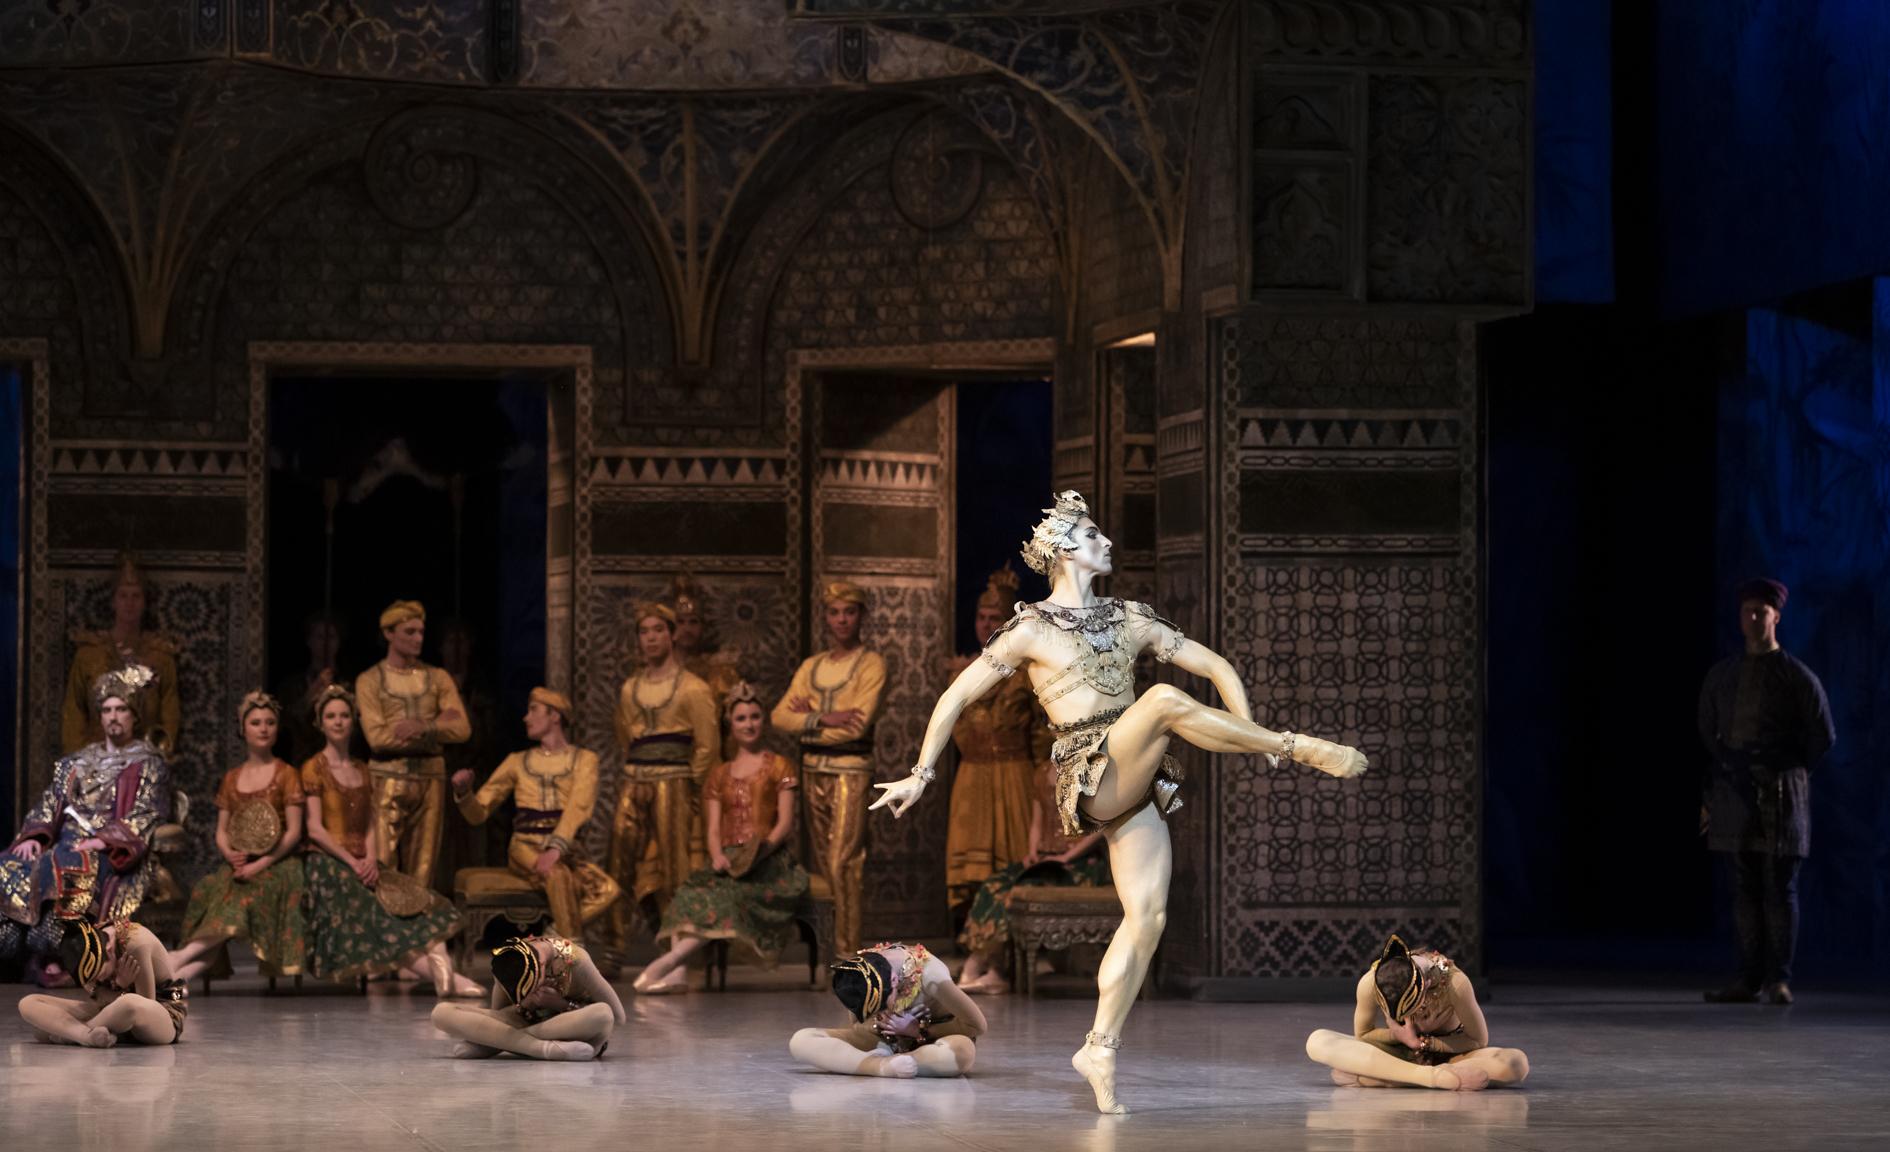 Marc Moreau飾演的黃金偶像，周圍簇擁著Danse des enfants的表演者；這是《La Bayadère》的第二幕，此作品由Rudolf Nureyev創作，巴黎歌劇院執導。